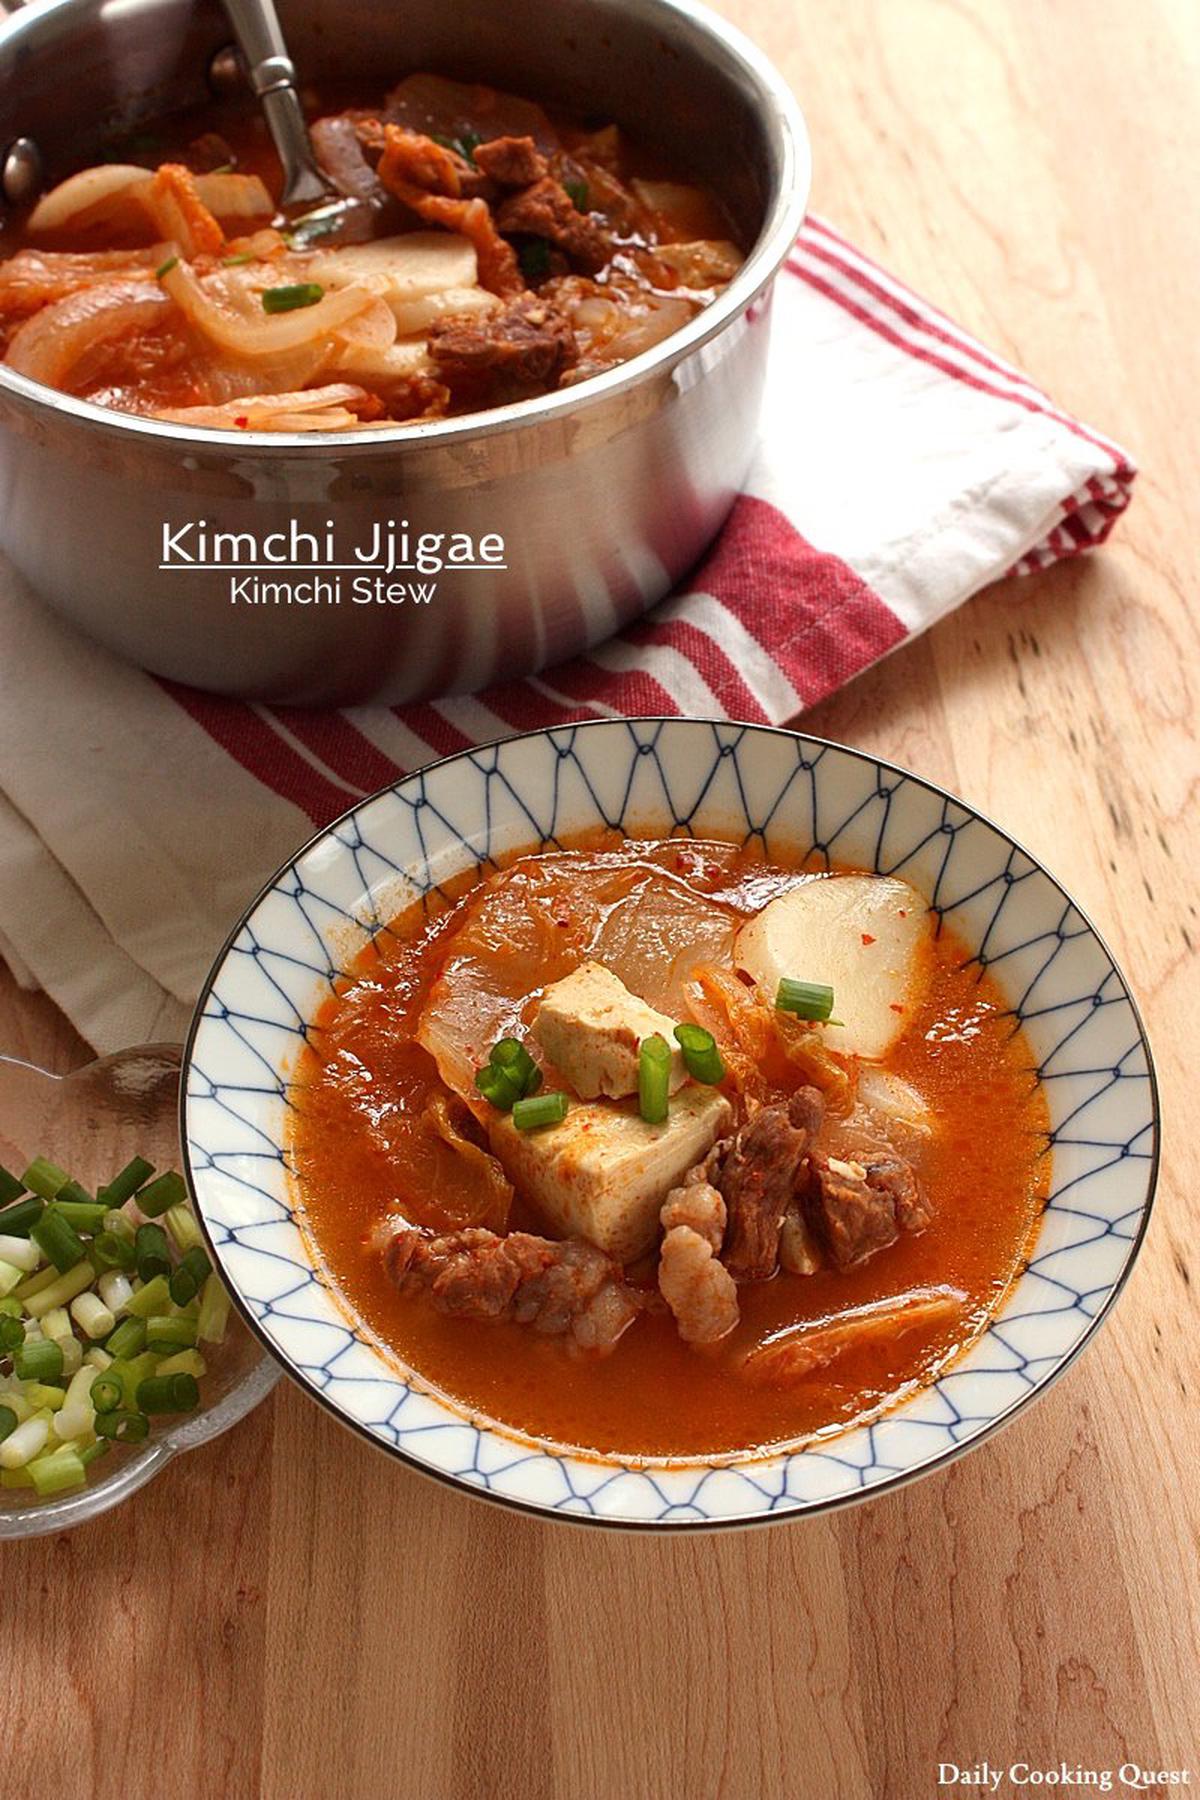 Kimchi Jjigae - Kimchi Stew